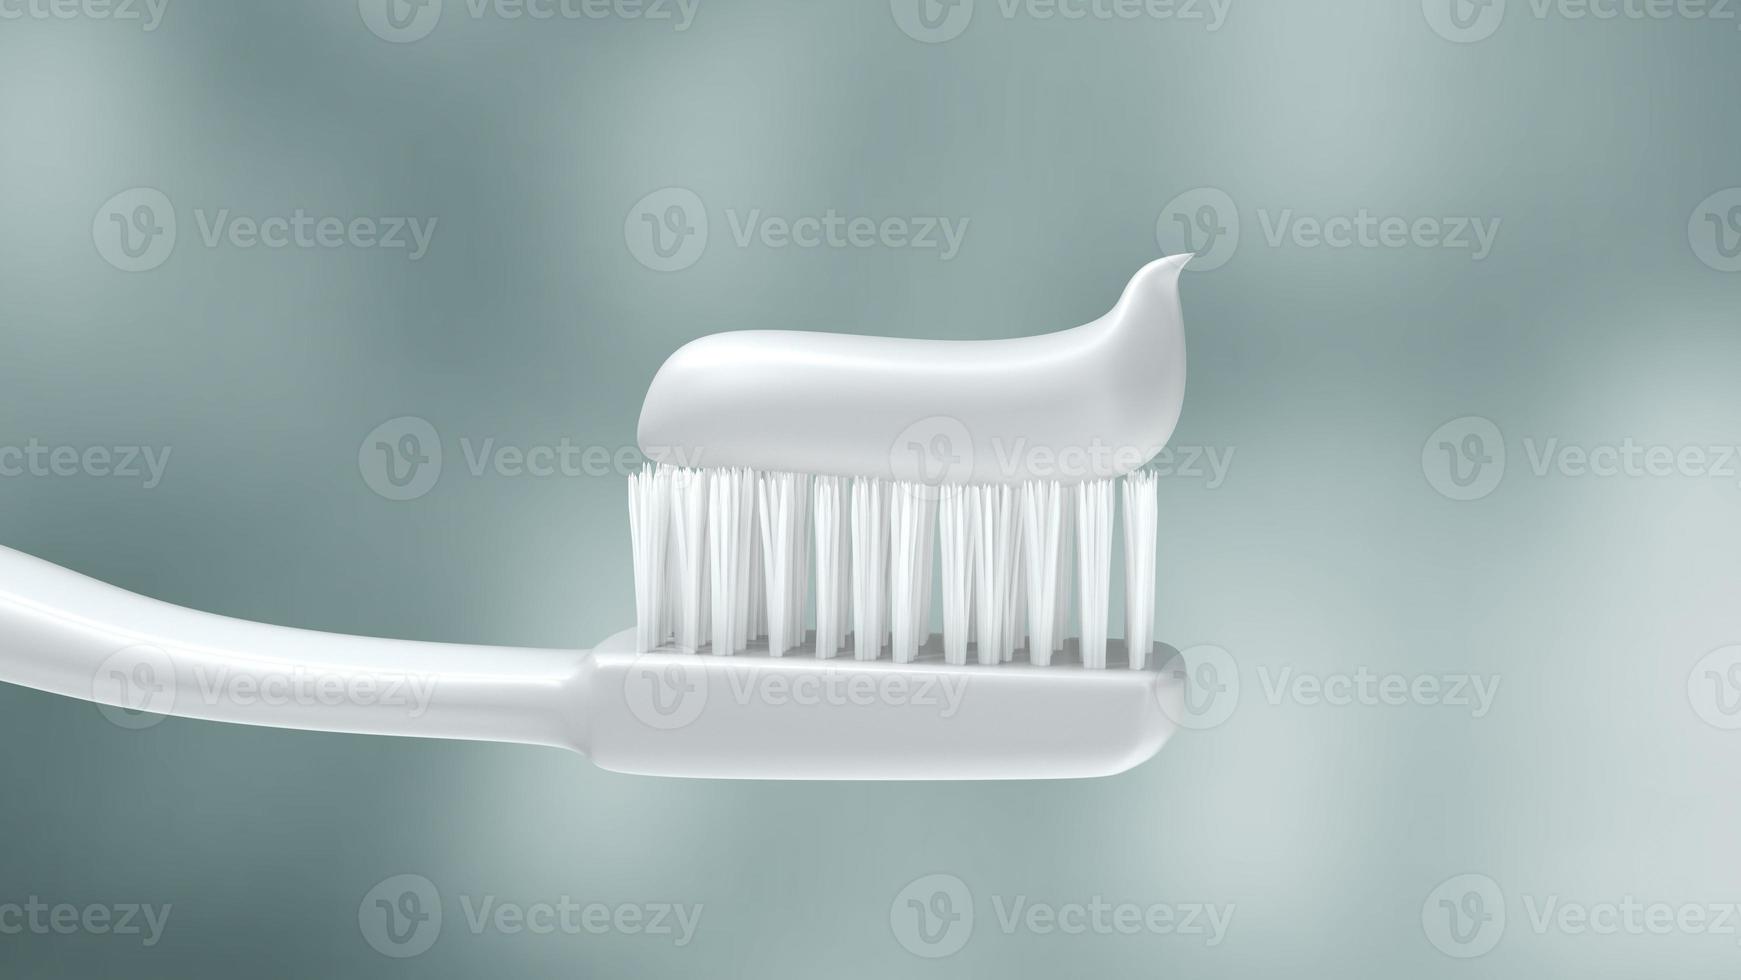 wit tandpasta knijpen Aan tandenborstel, 3d weergave, knipsel pad. foto